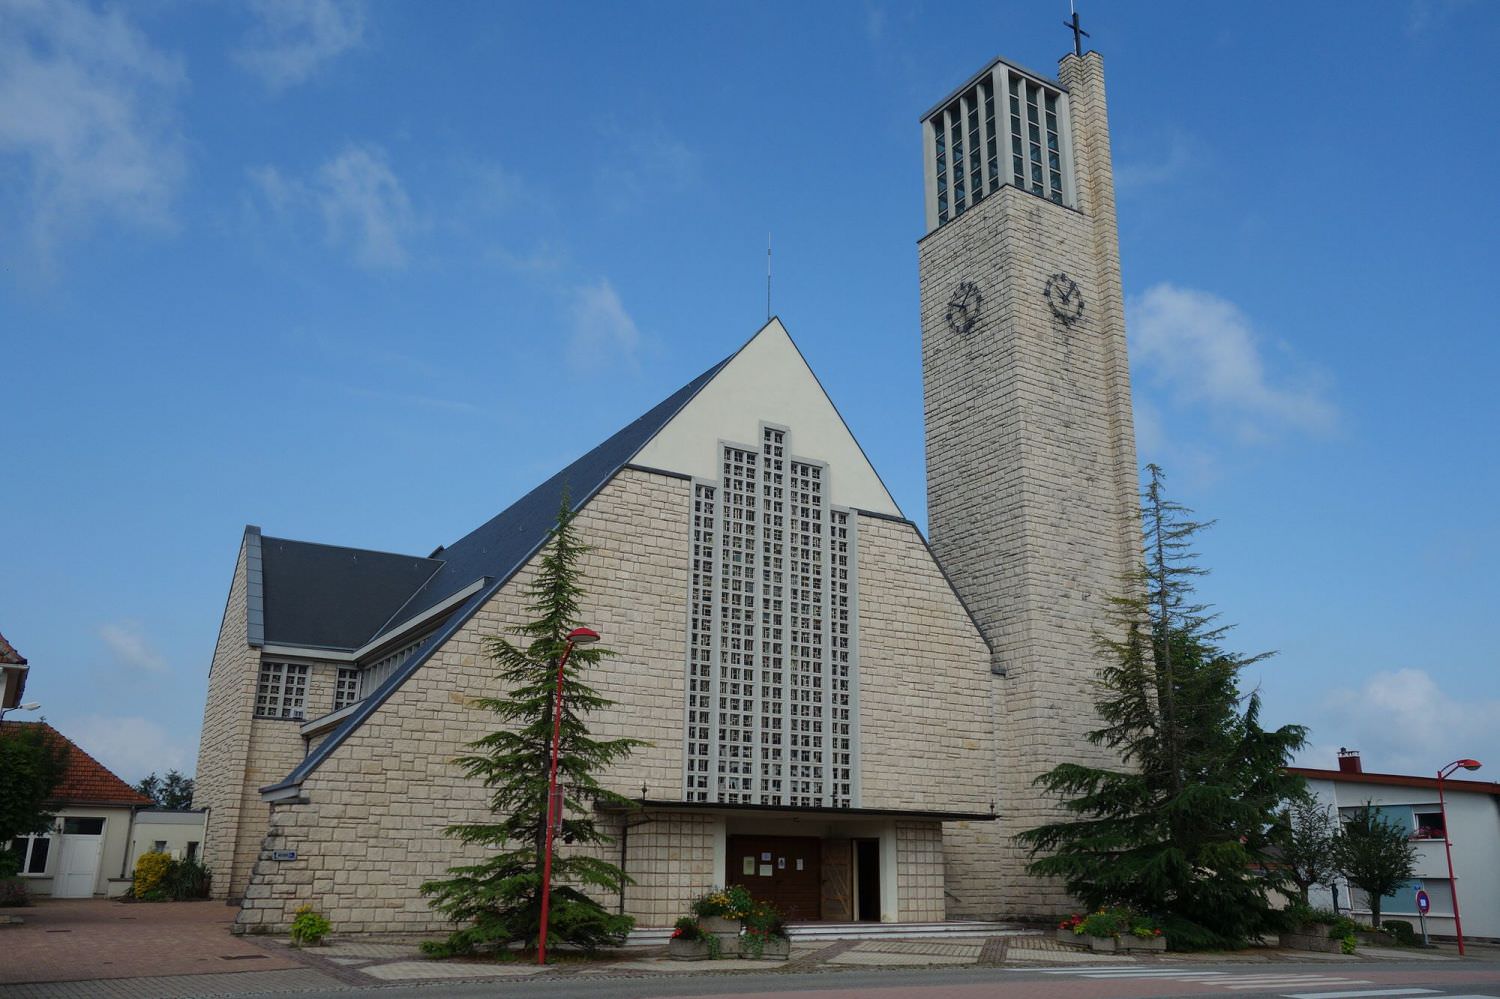 L'Eglise Saint-Nicolas